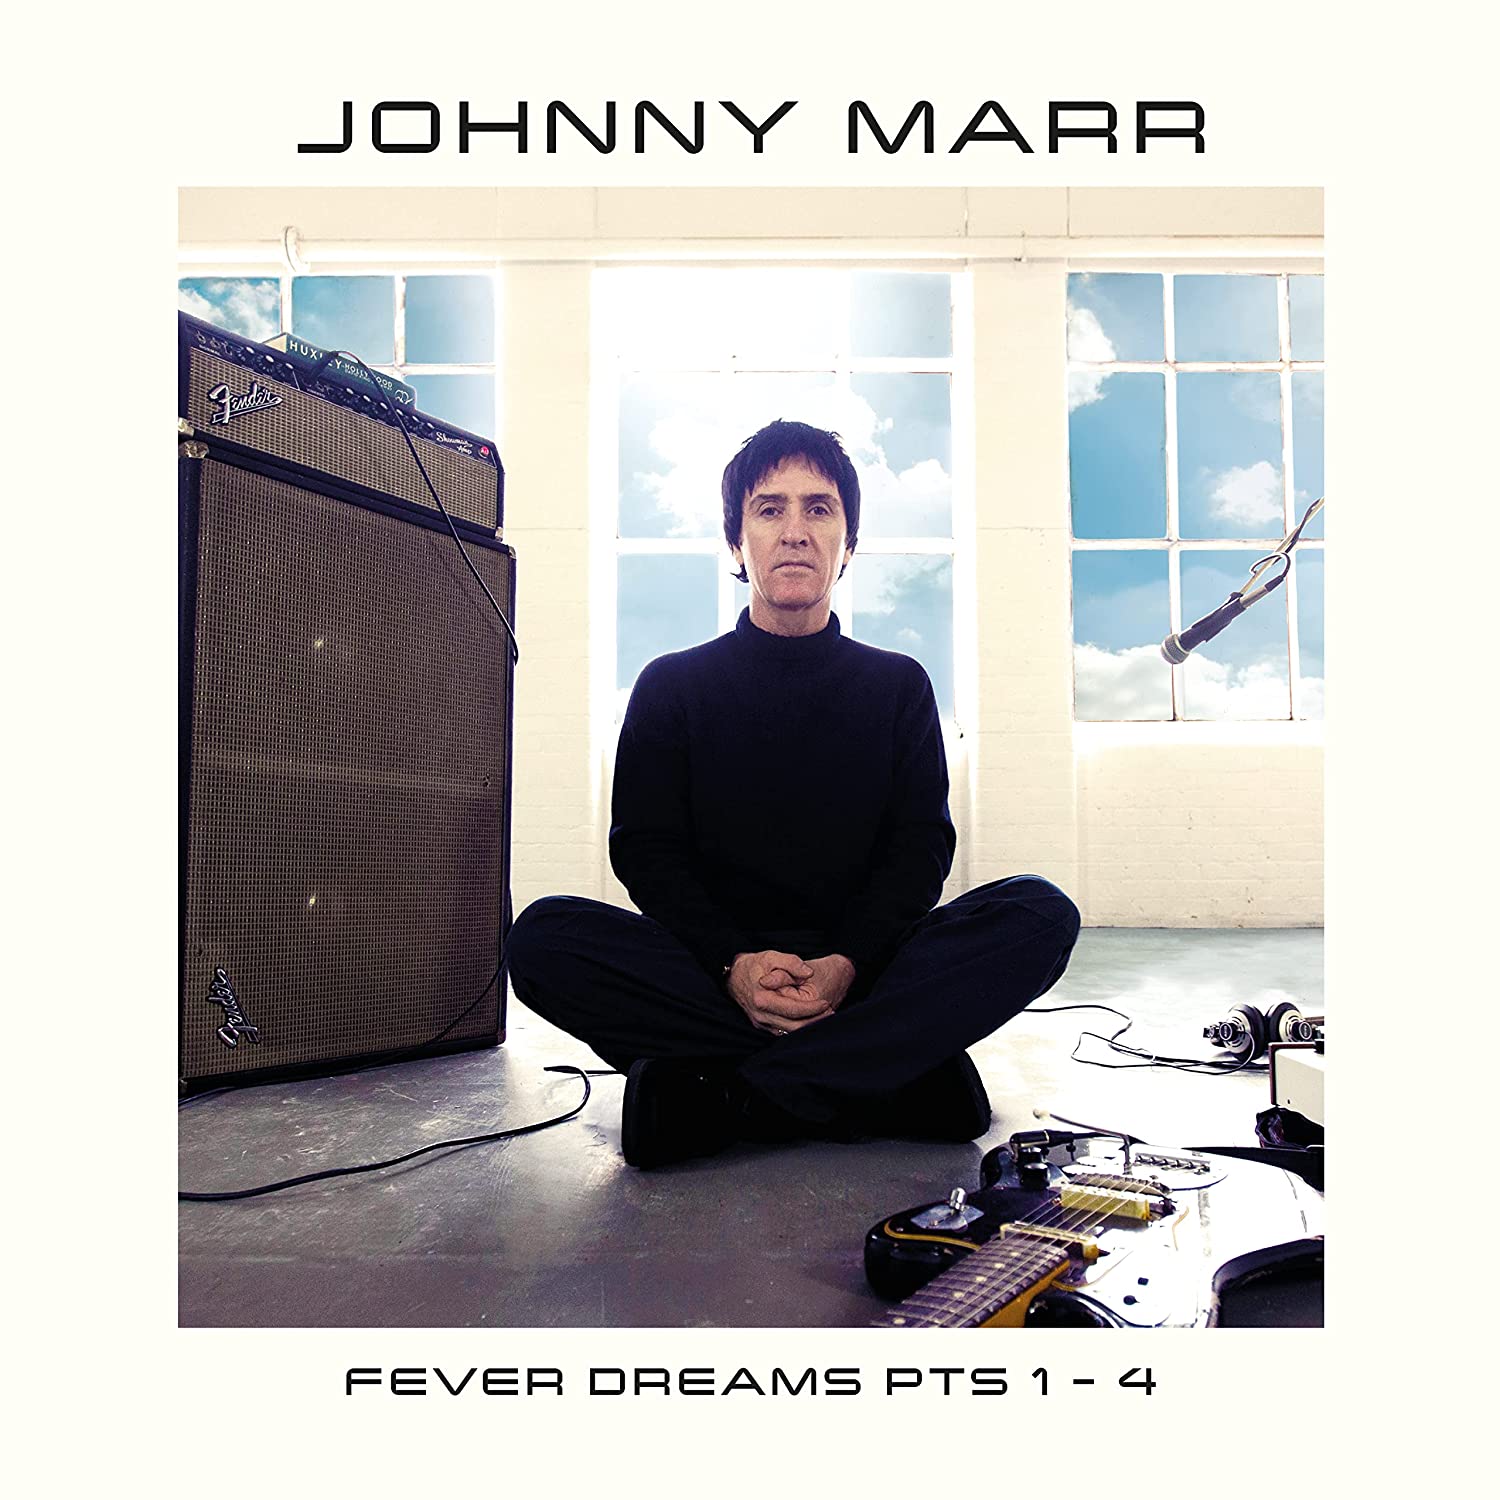 Johnny Marr Fever Dreams Pts 1 - 4 - Ireland Vinyl